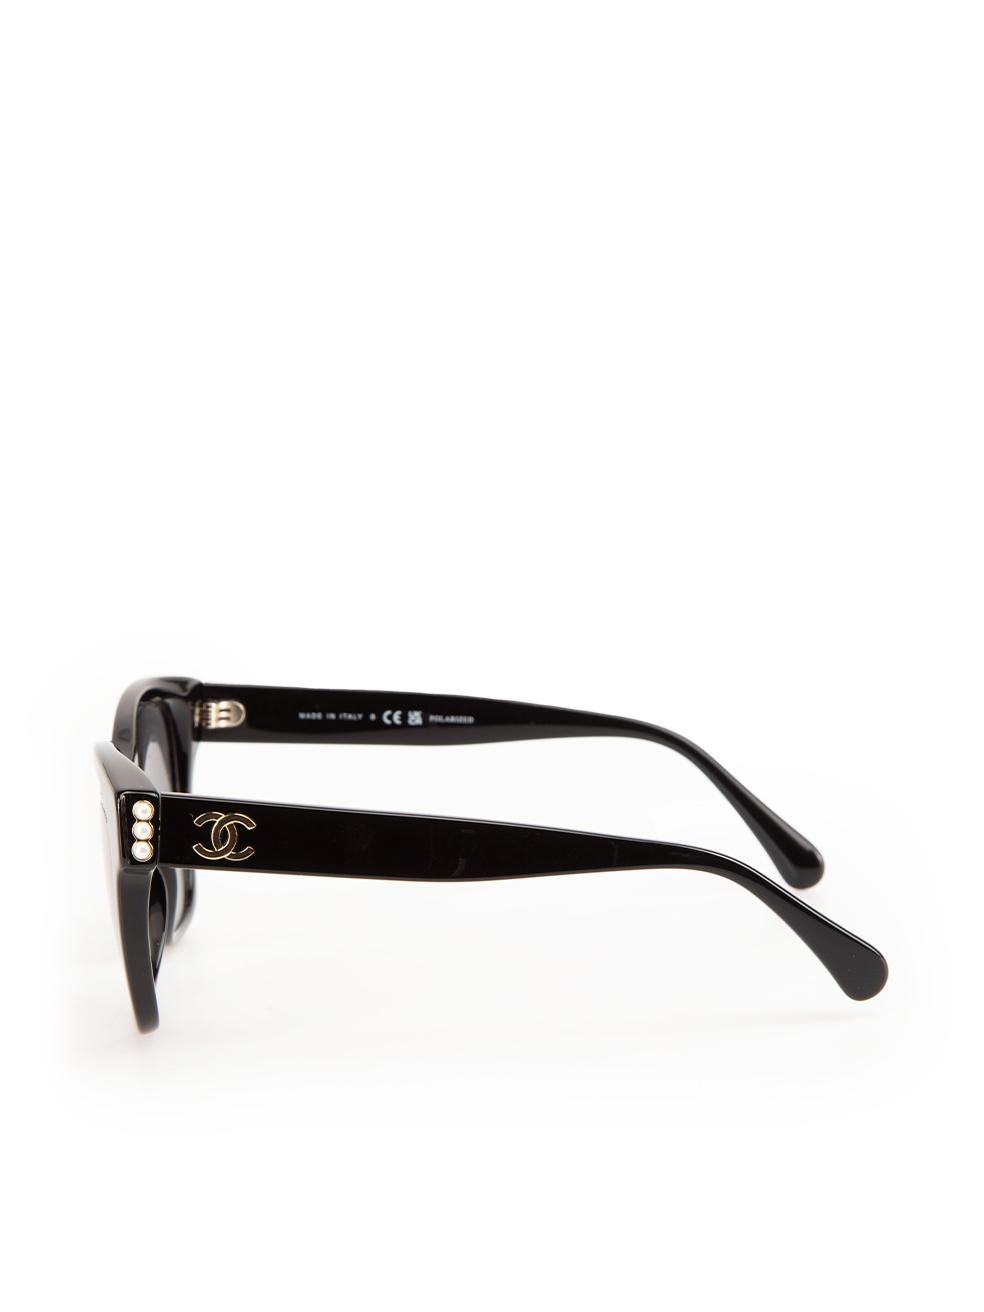 Chanel Black Square Wayfarer Sunglasses For Sale 1